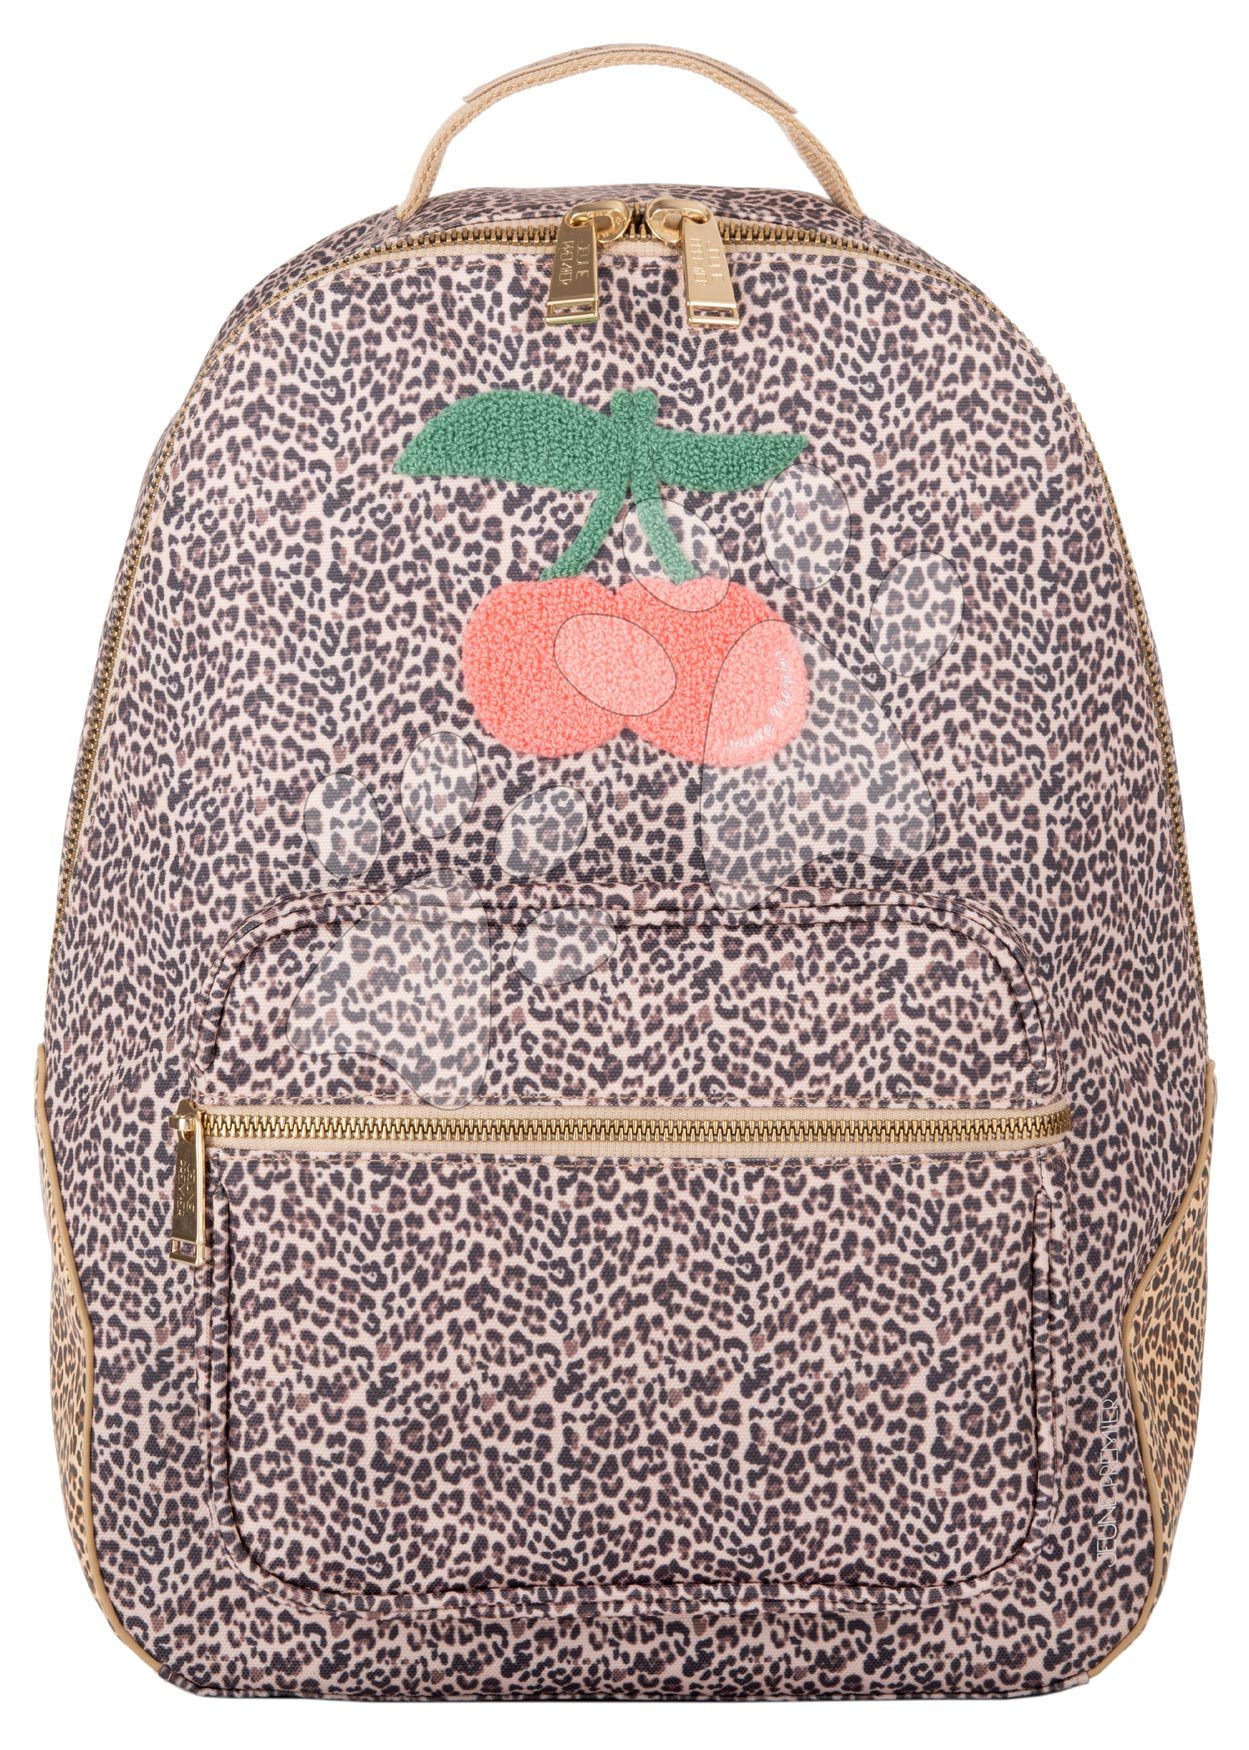 Iskolai hátizsák Backpack Bobbie Leopard Cherry Jeune Premier ergonomikus luxus kivitel 41*30 cm